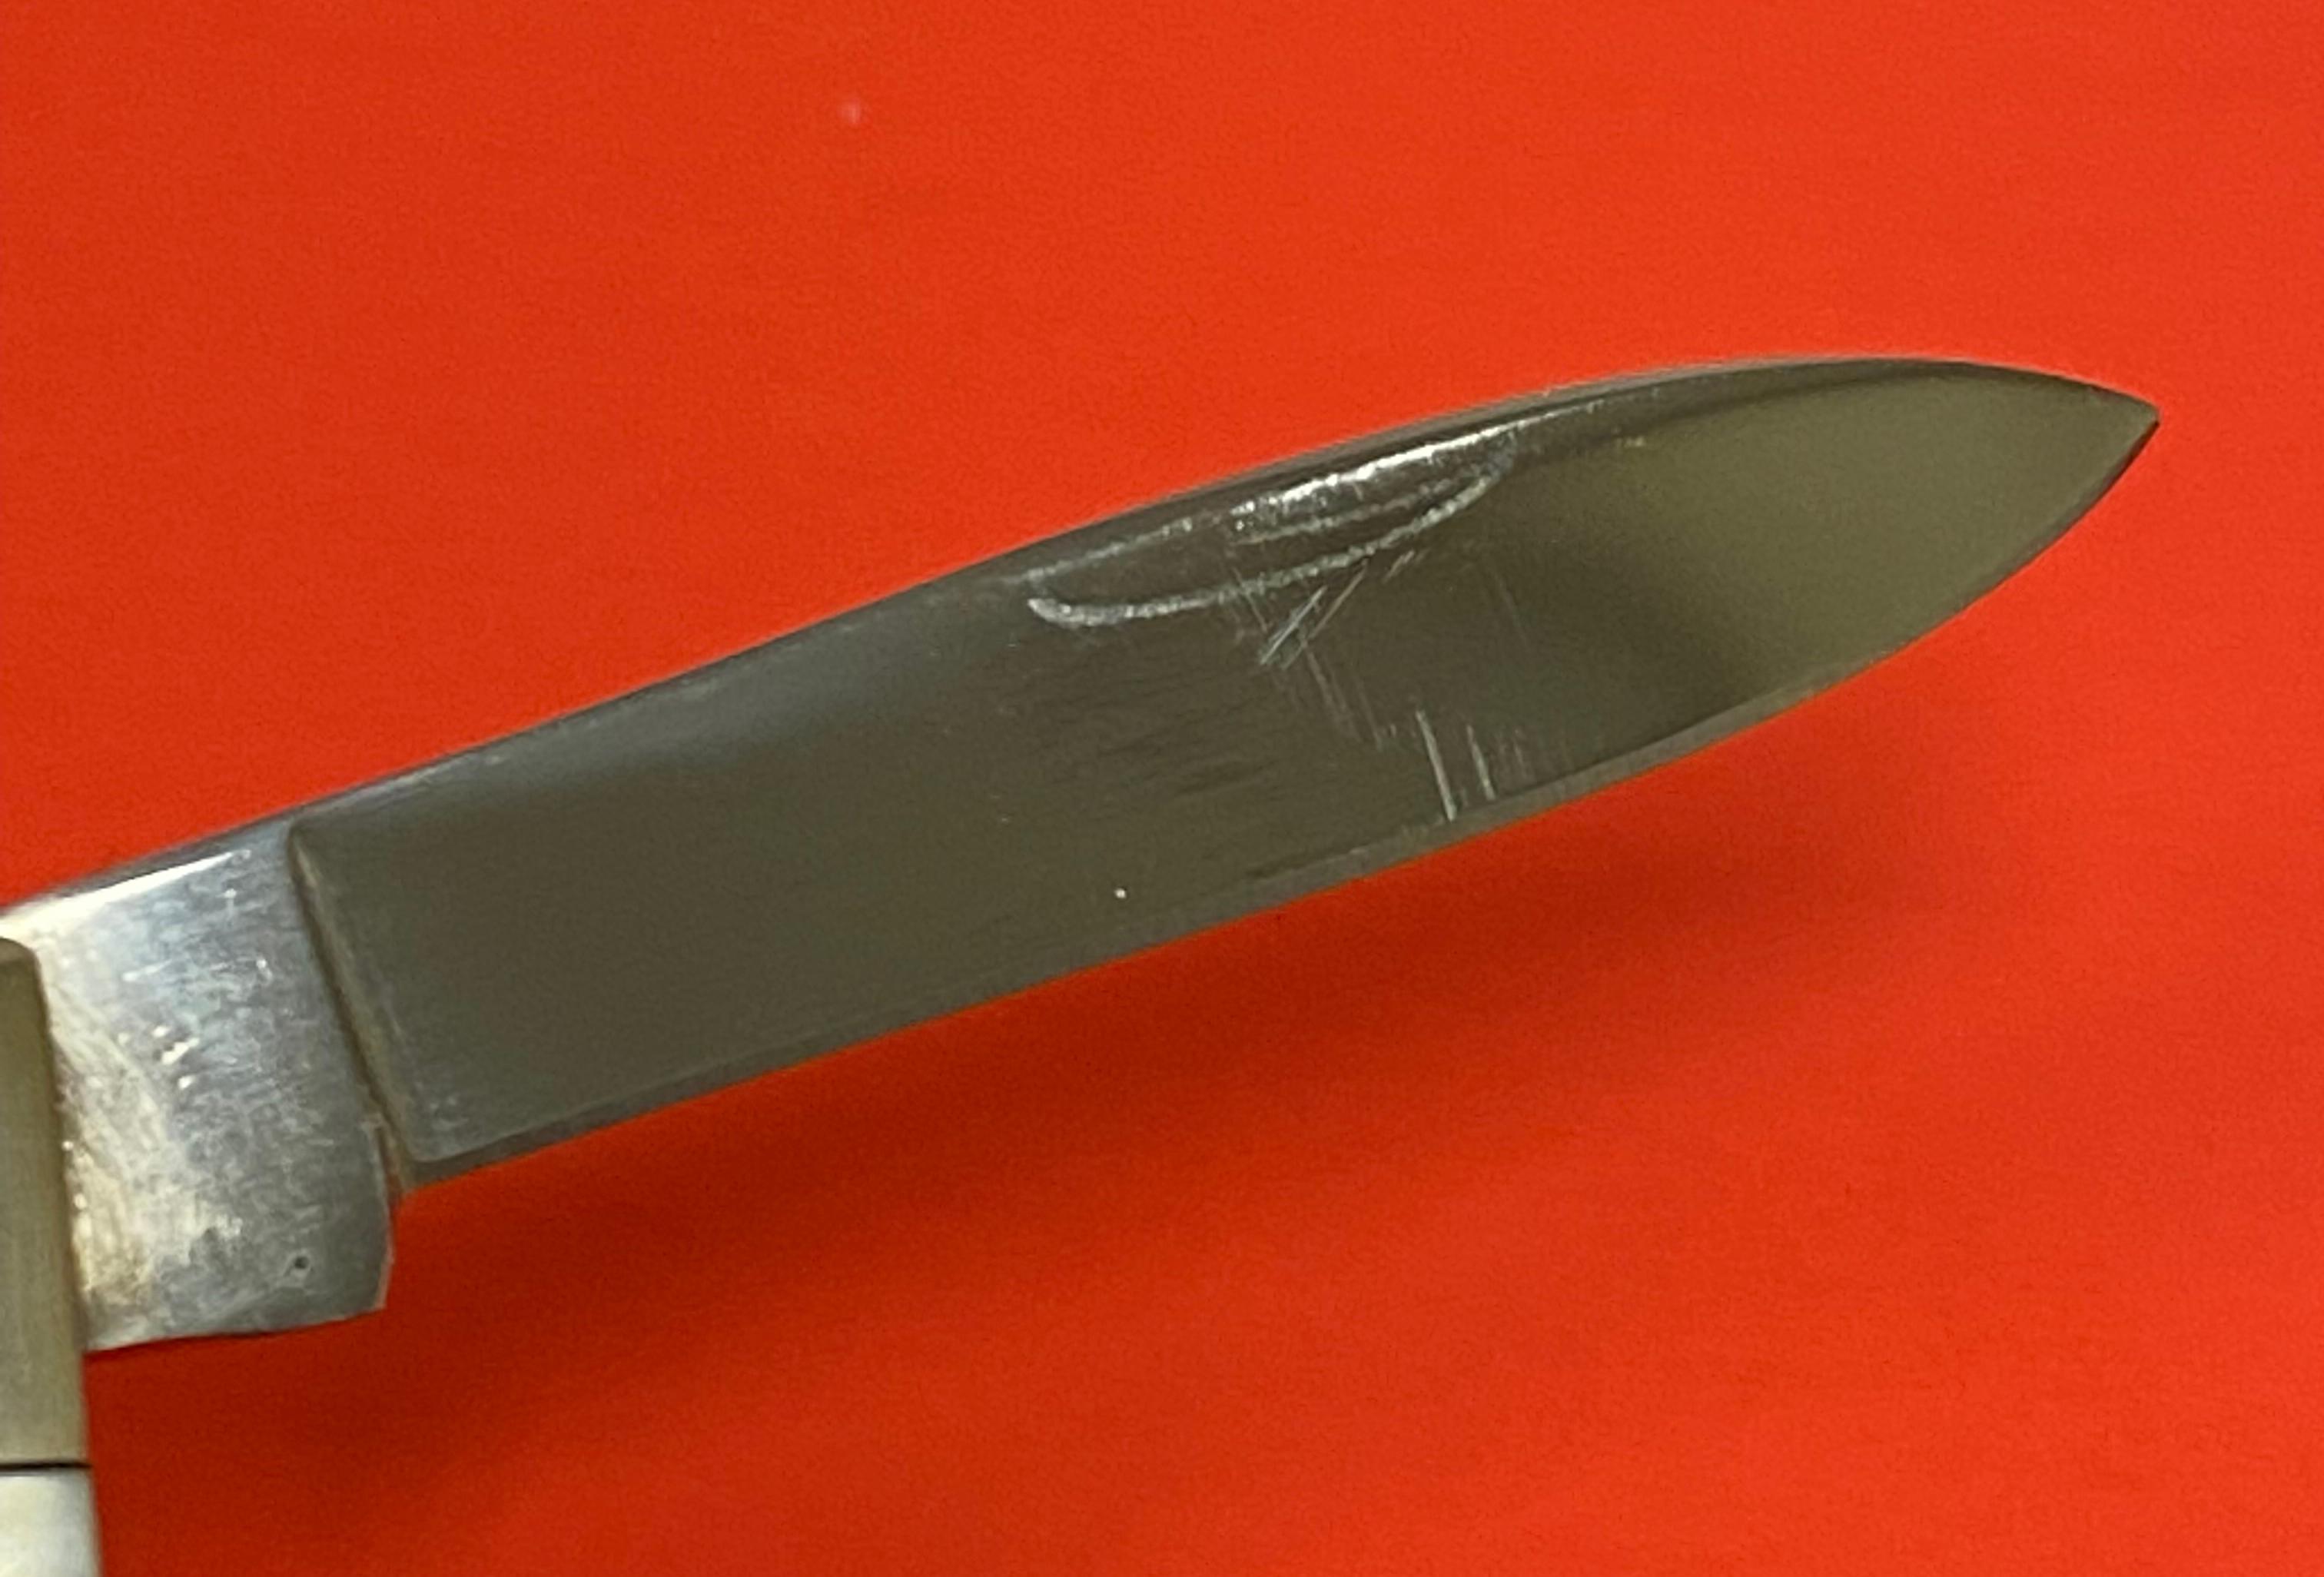 Case XX 92042 SS "Ashworth Bros Inc." New Grind Pen Knife in Case